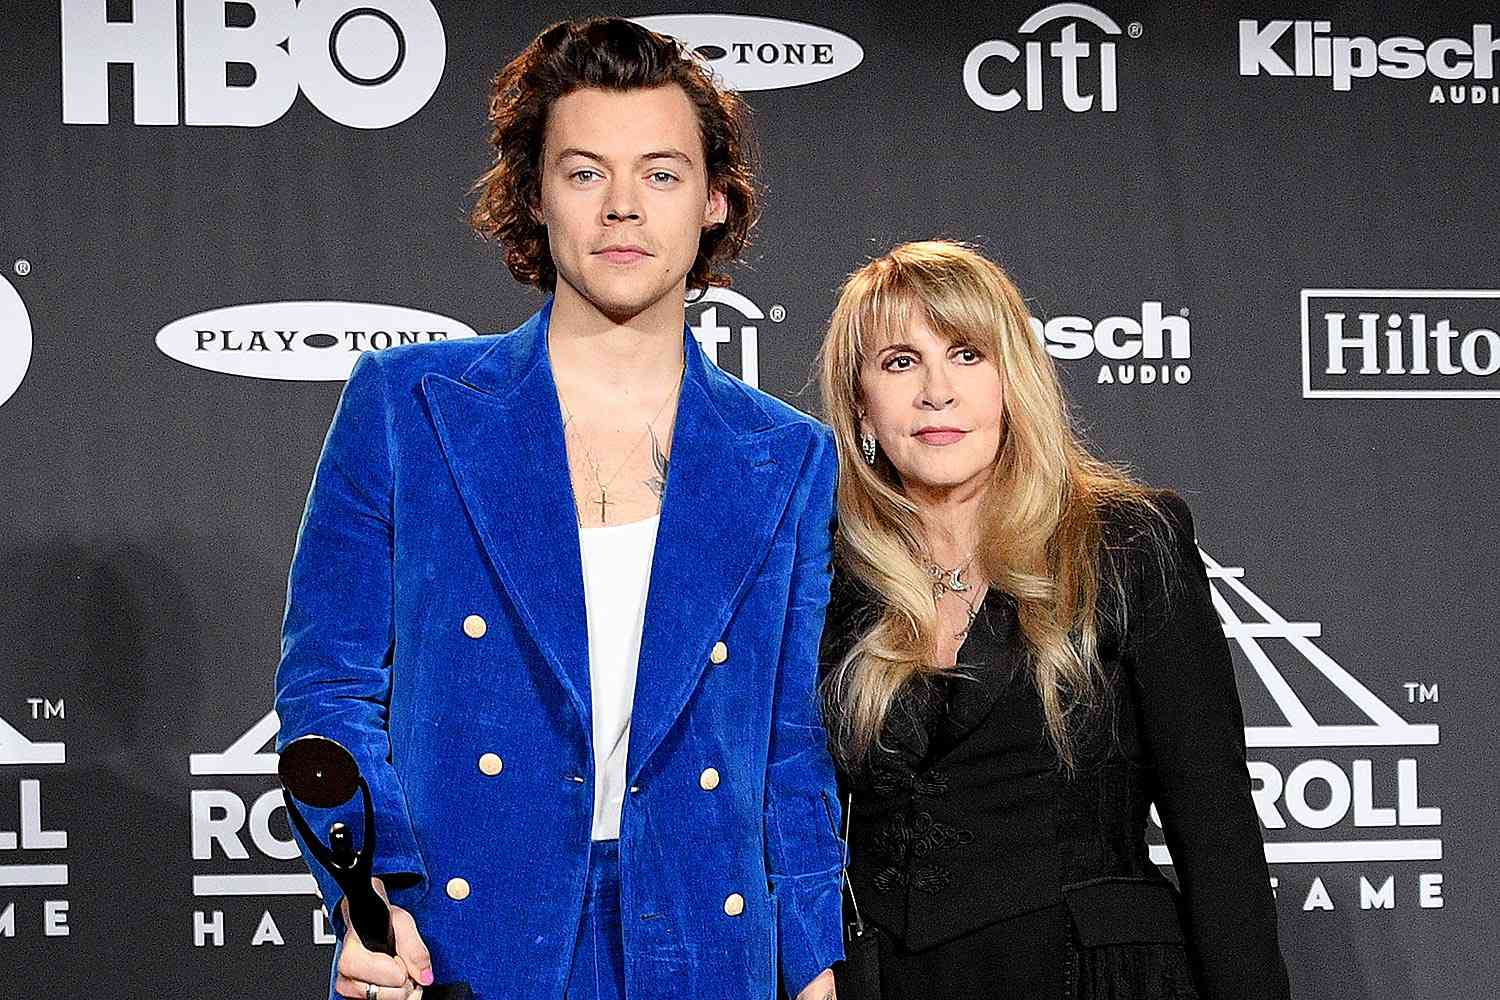 Harry Styles Joins Stevie Nicks Onstage for 'Landslide' Tribute to Christine McVie